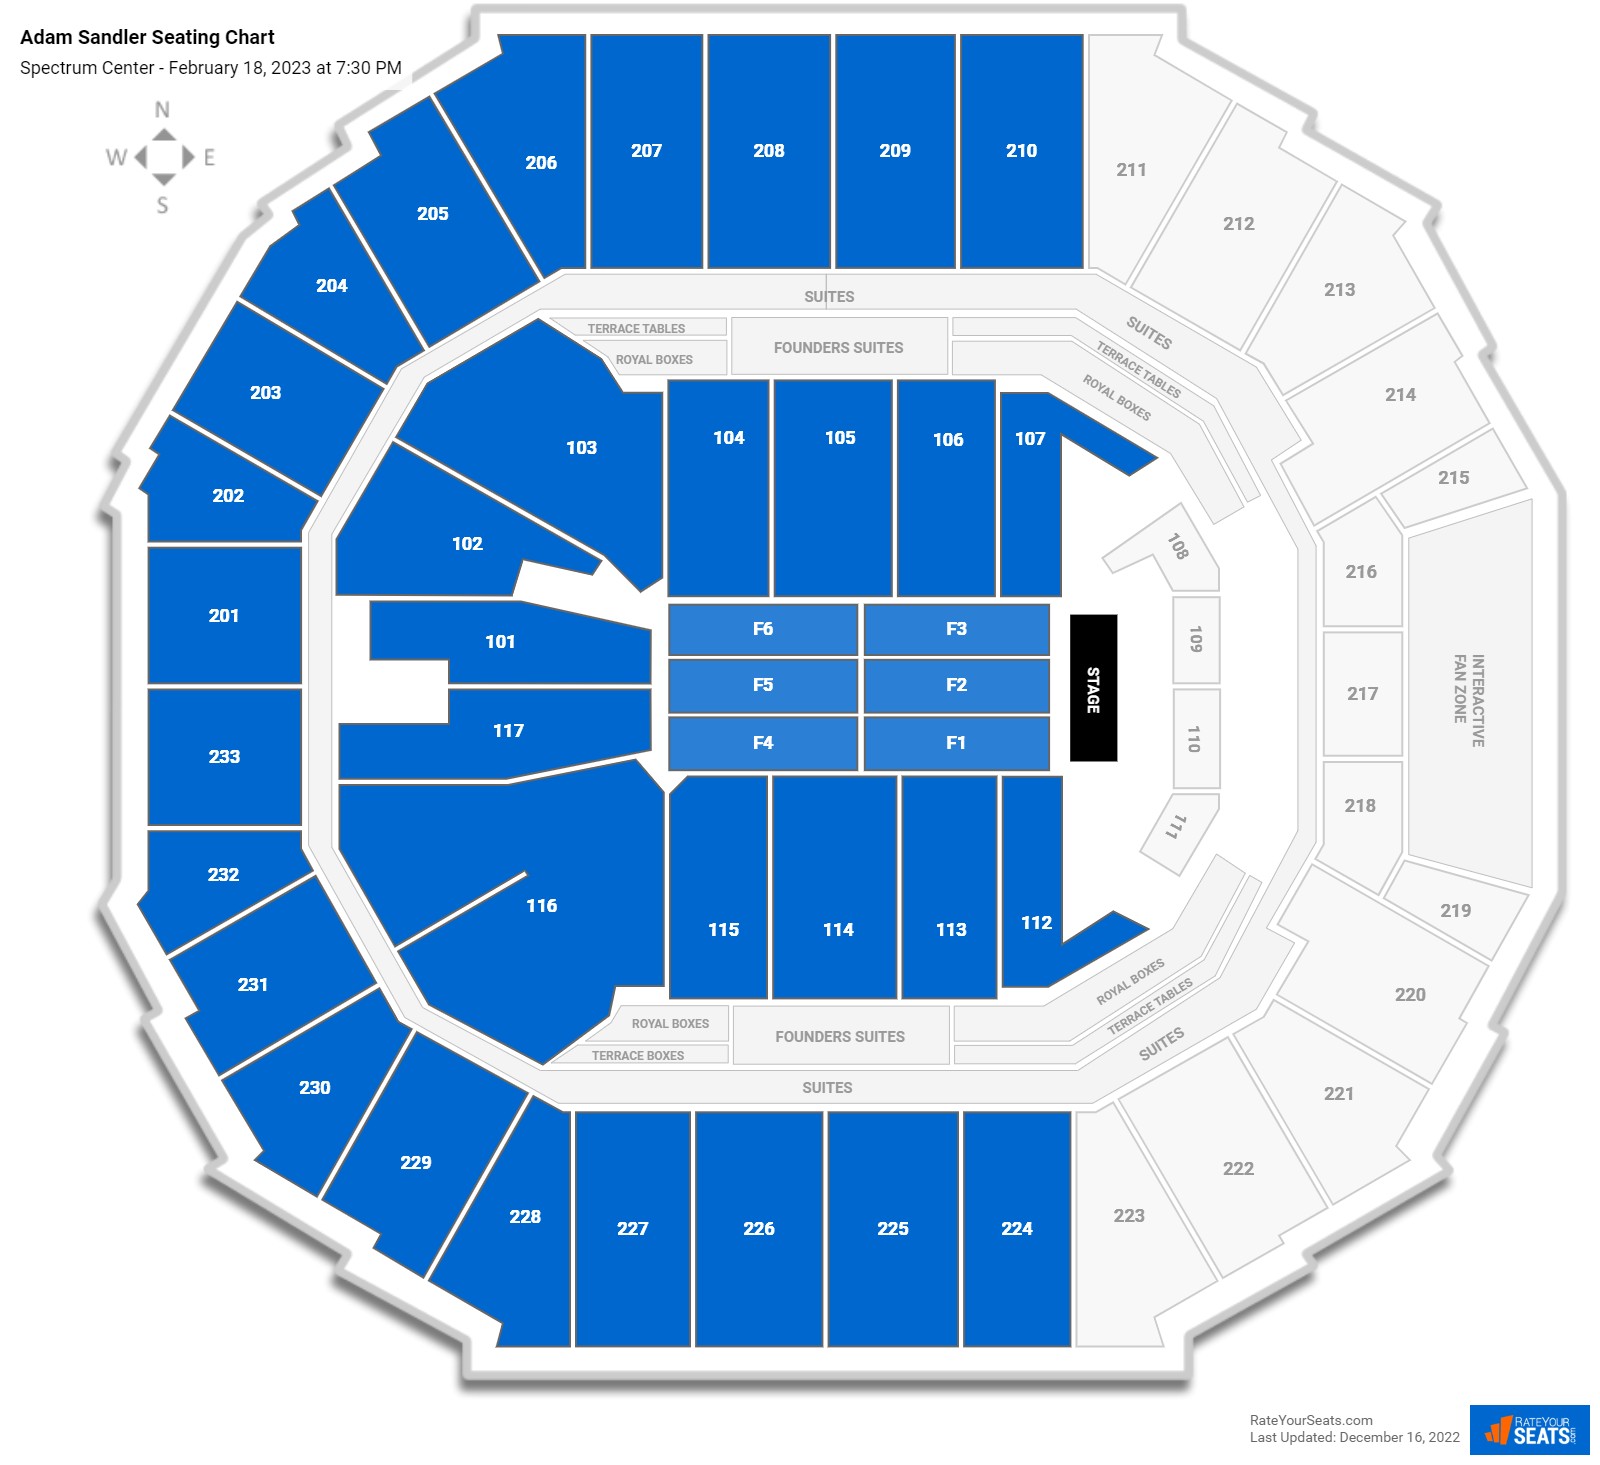 Spectrum Center Concert Seating Chart